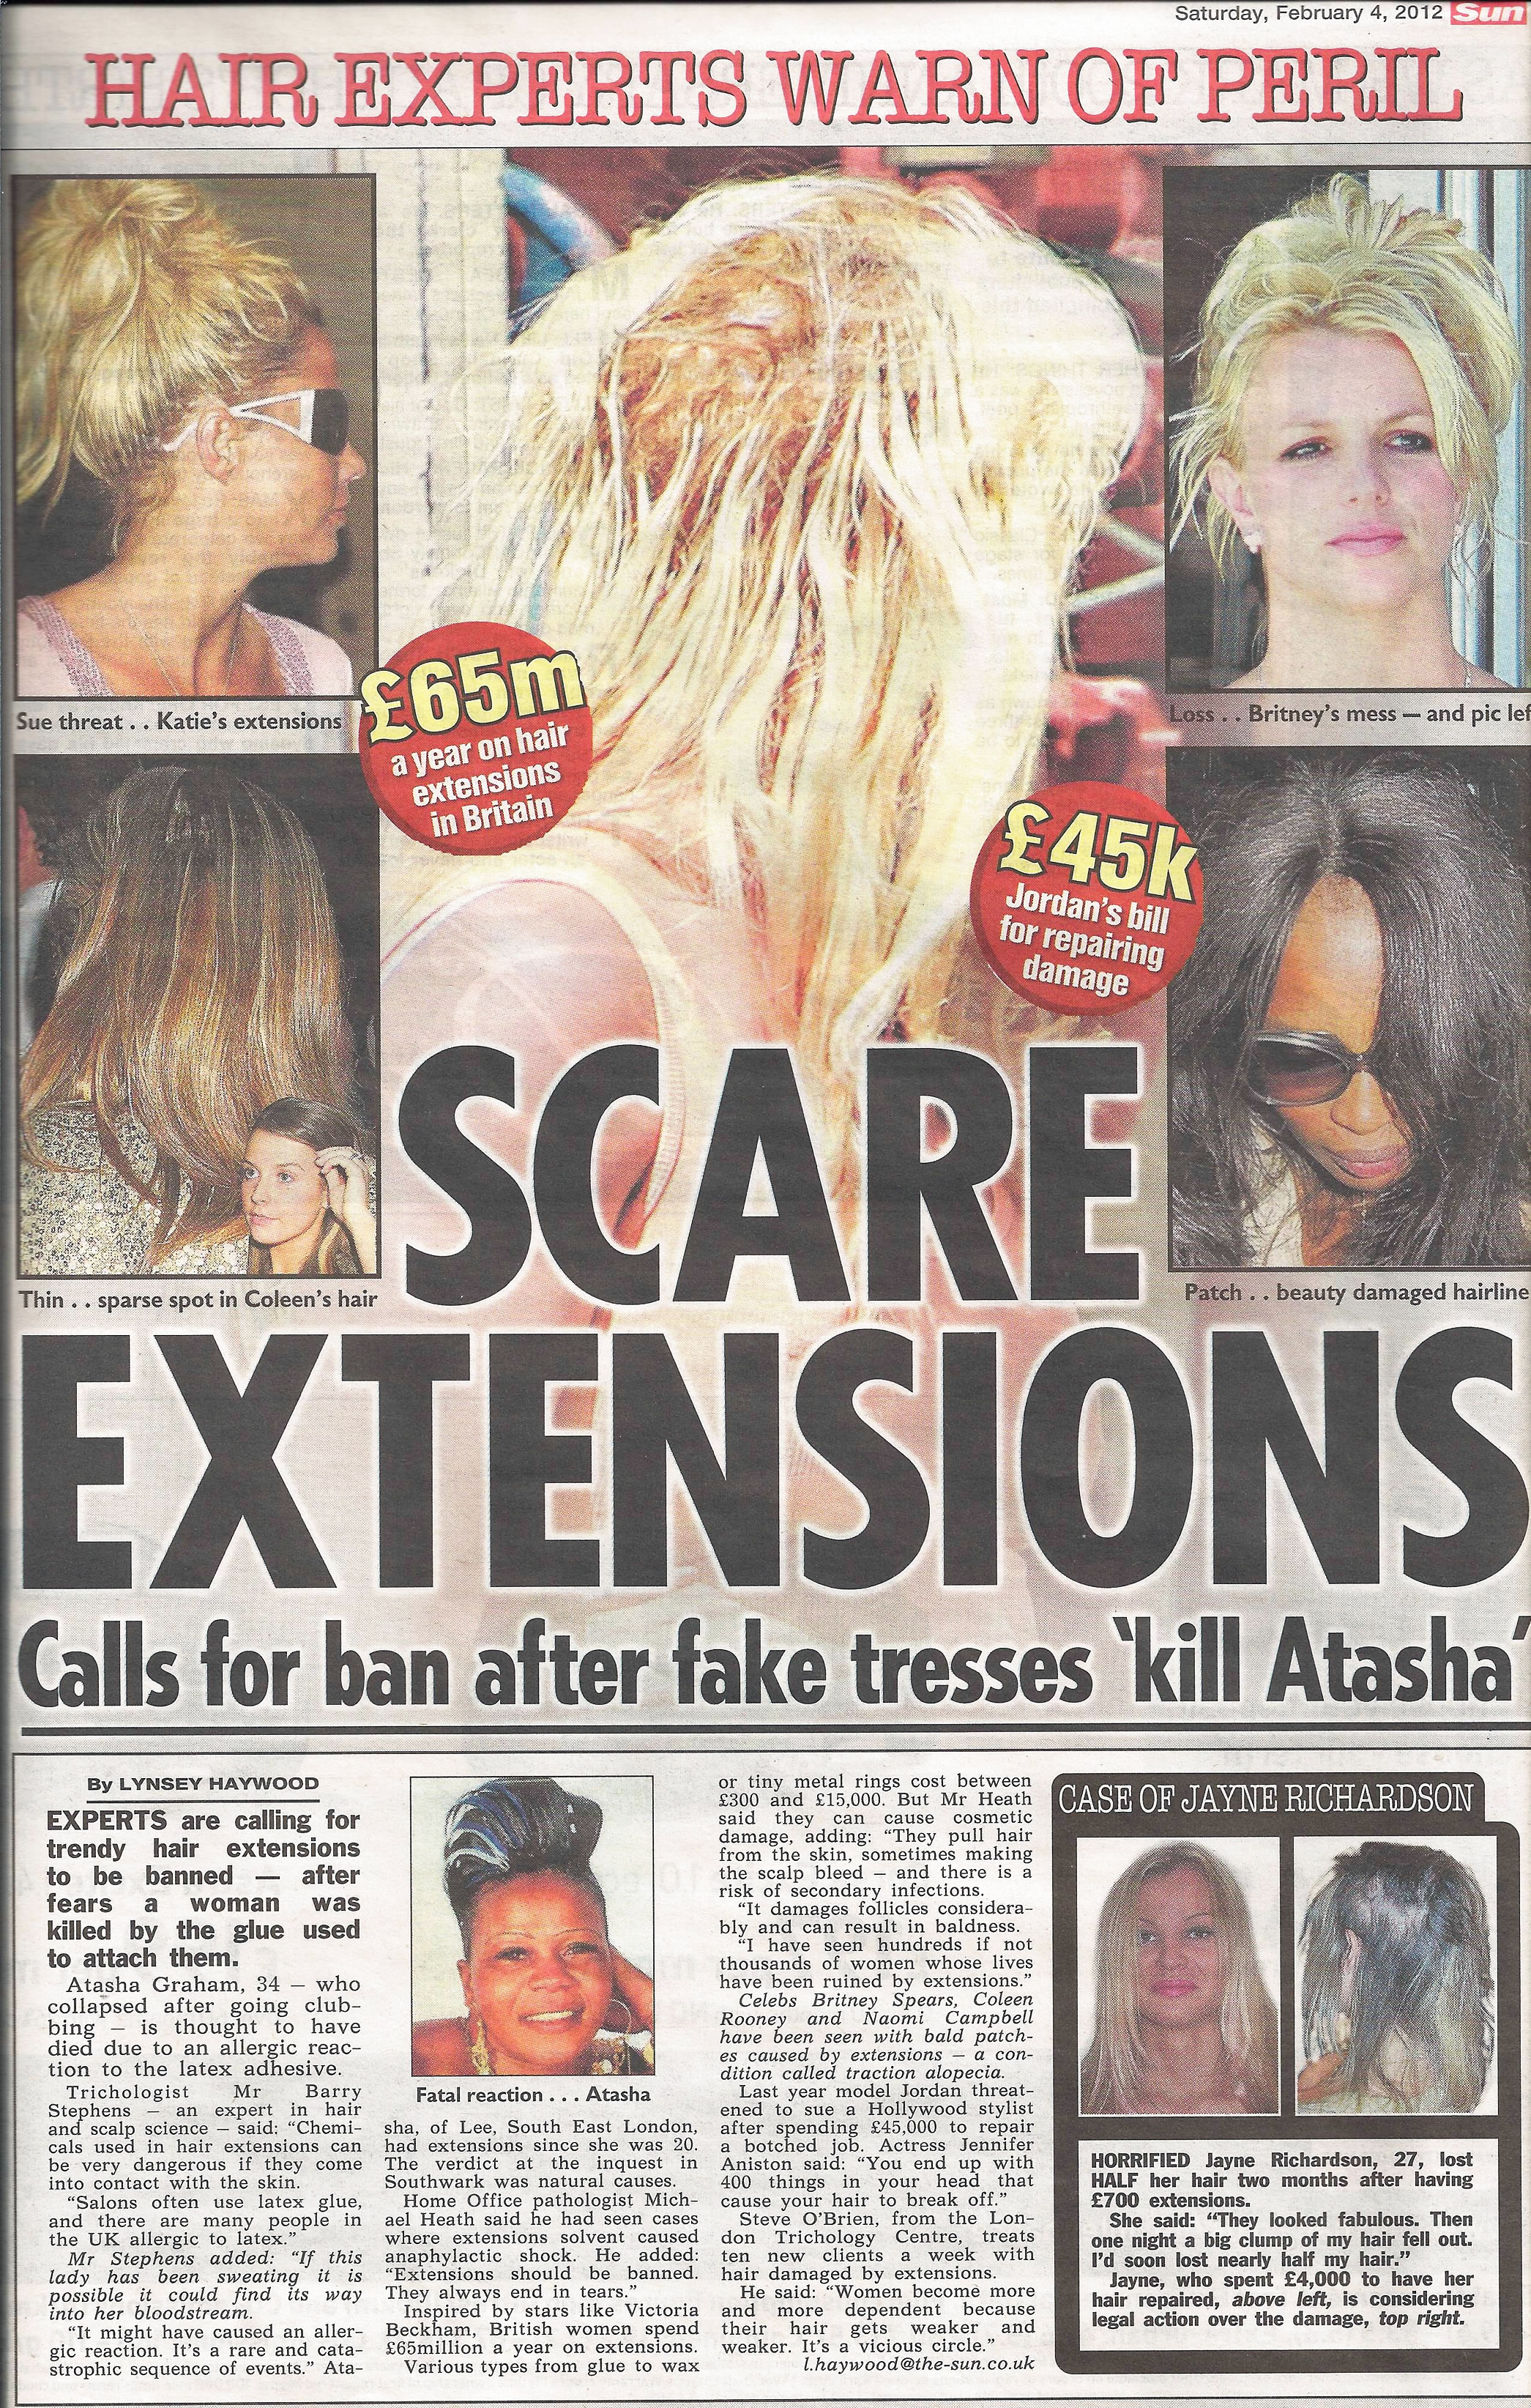 'Scare Extensions - Calls for ban after fake tresses 'kill Atasha'' - The Sun